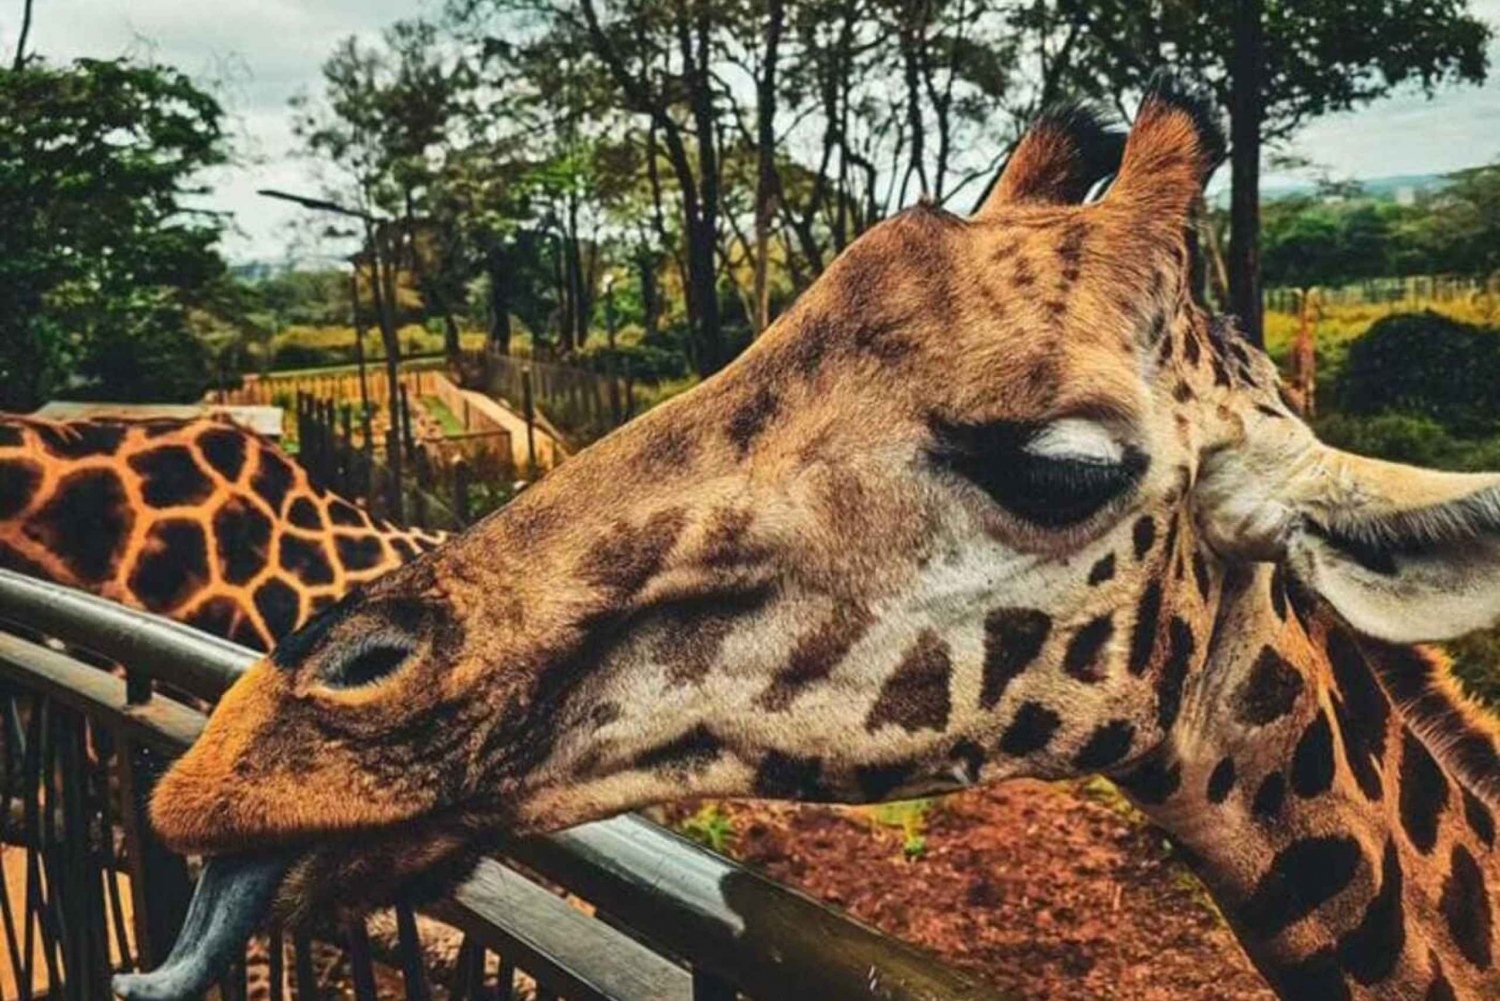 Visite privée de 2 heures au centre des girafes à Nairobi